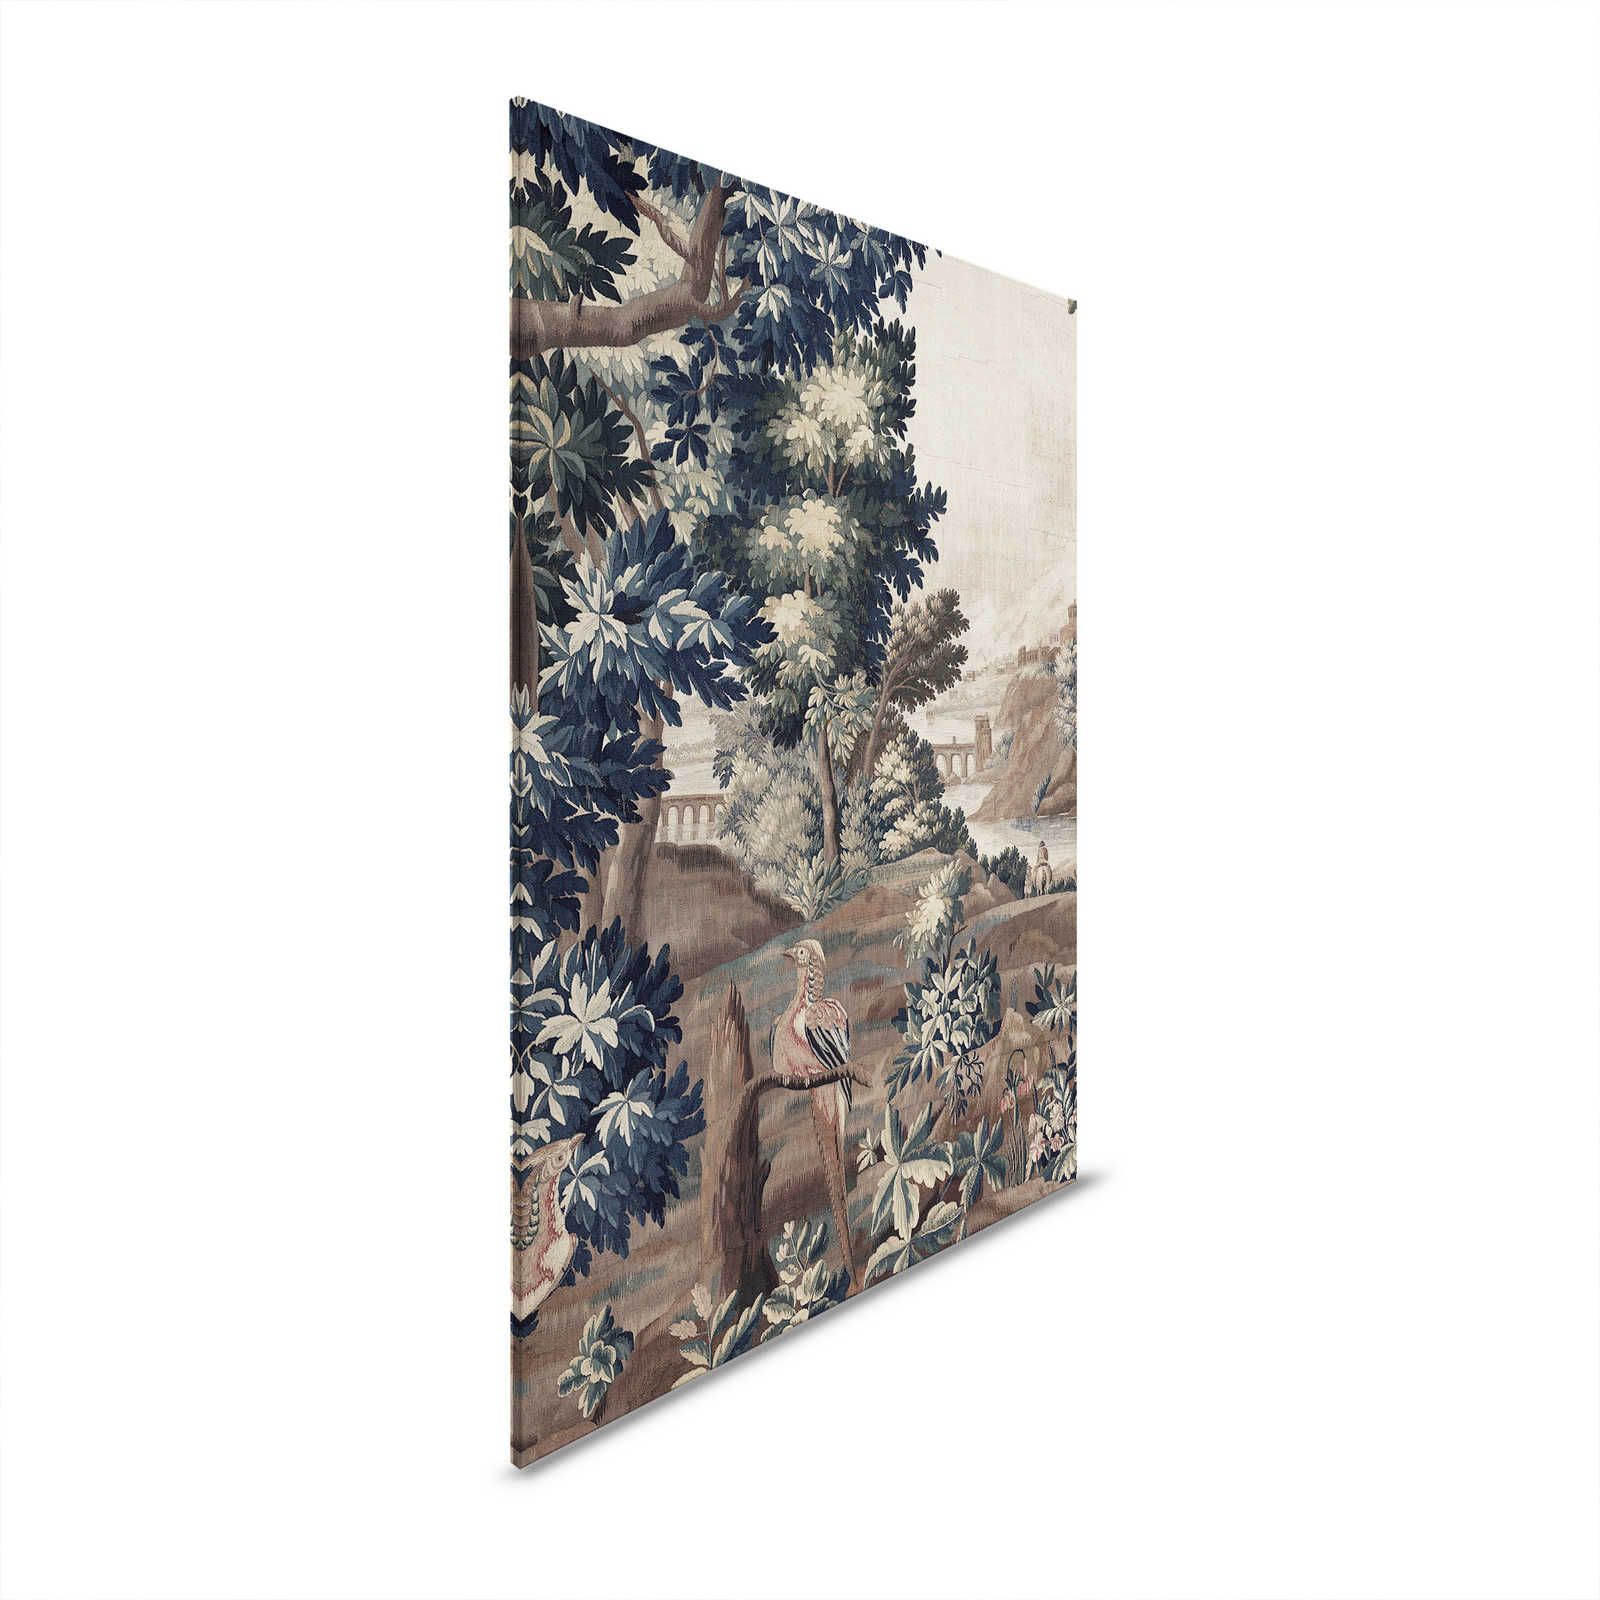 Gobelin Gallery 2 - Lienzo tapiz estilo arte clásico - 1,20 m x 0,80 m
